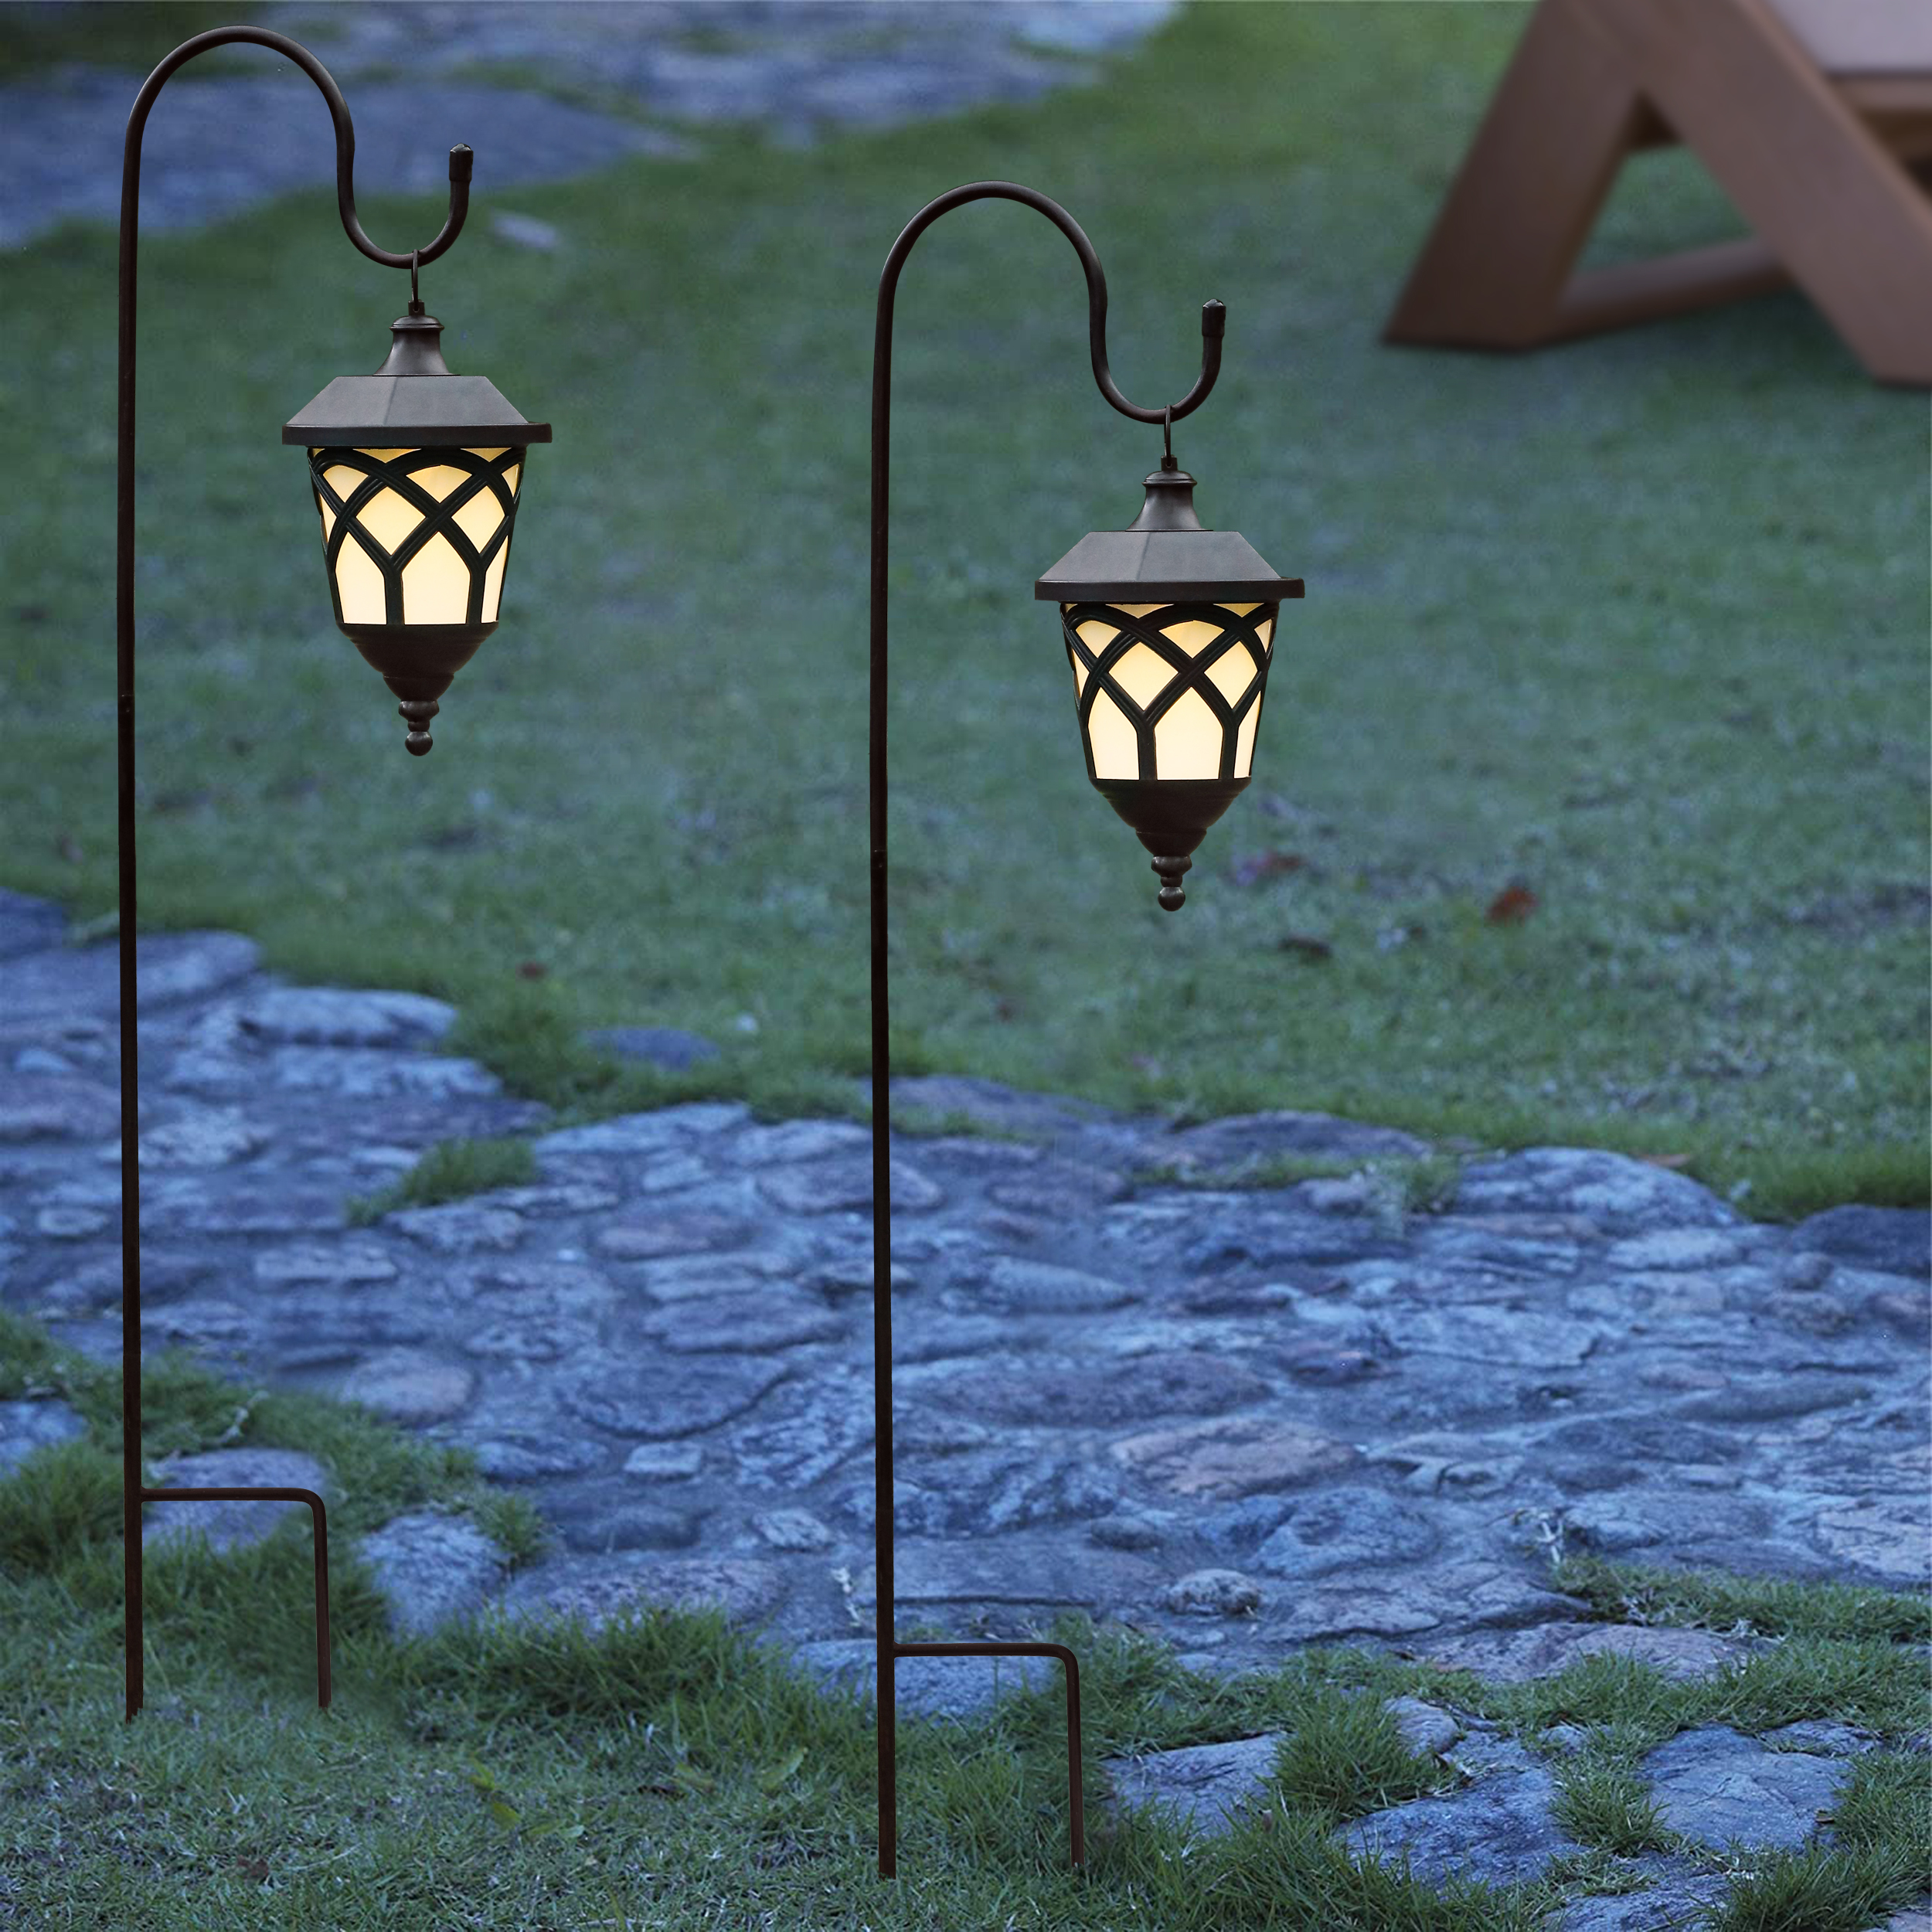 Wh073 Hanging Solar Lanterns With Shepherd Hooks - Set Of 2